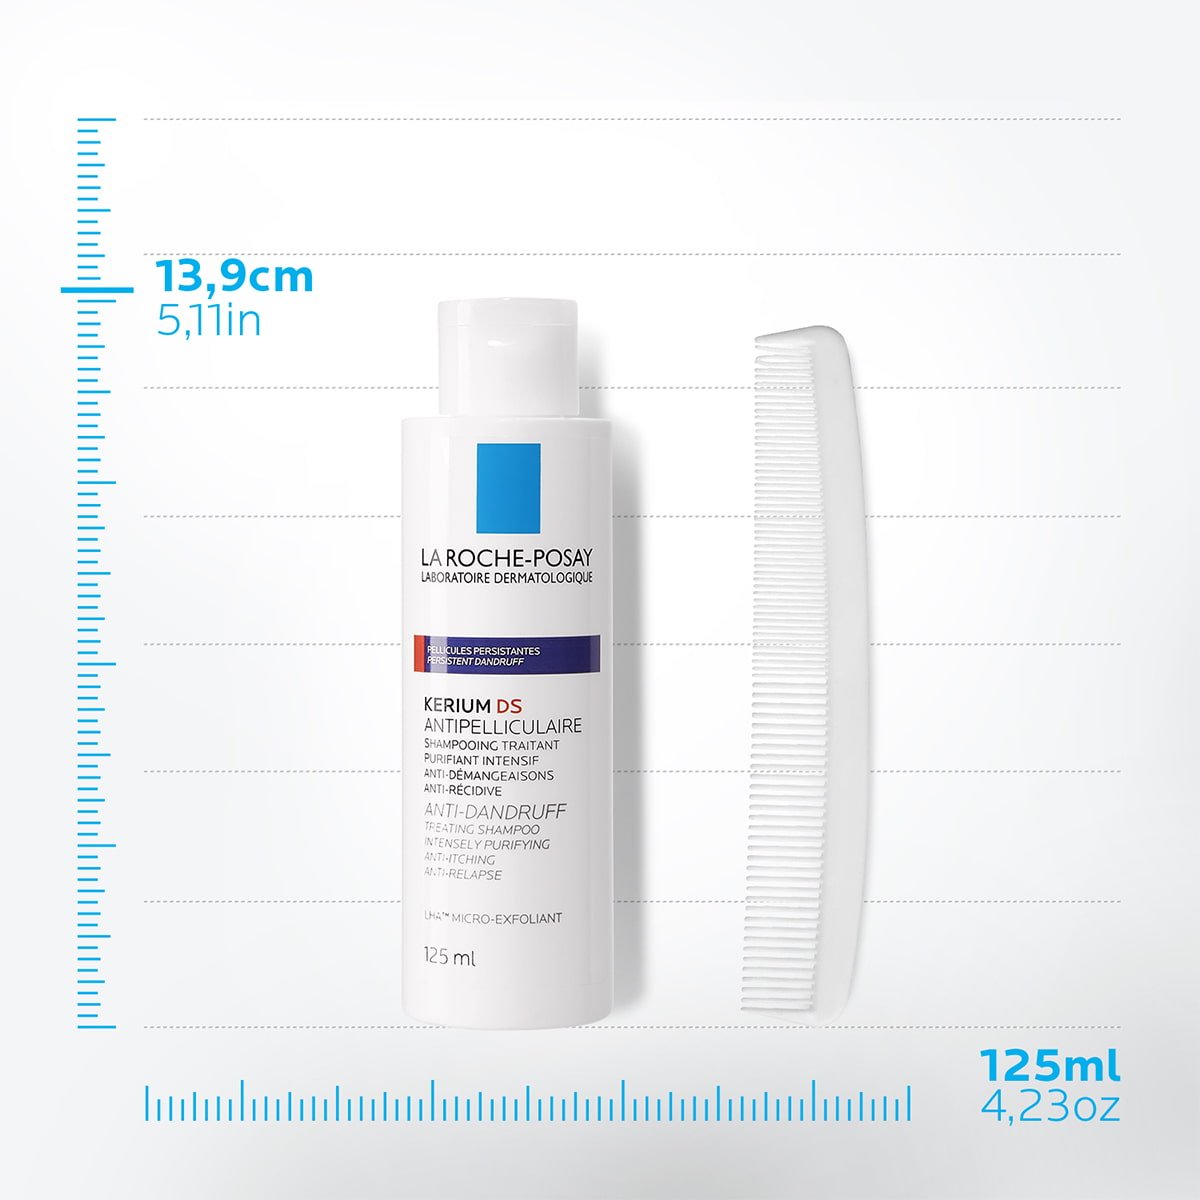 La Roche Posay ProductPage Kerium DS Anti Dandruff Treating Shampoo 12